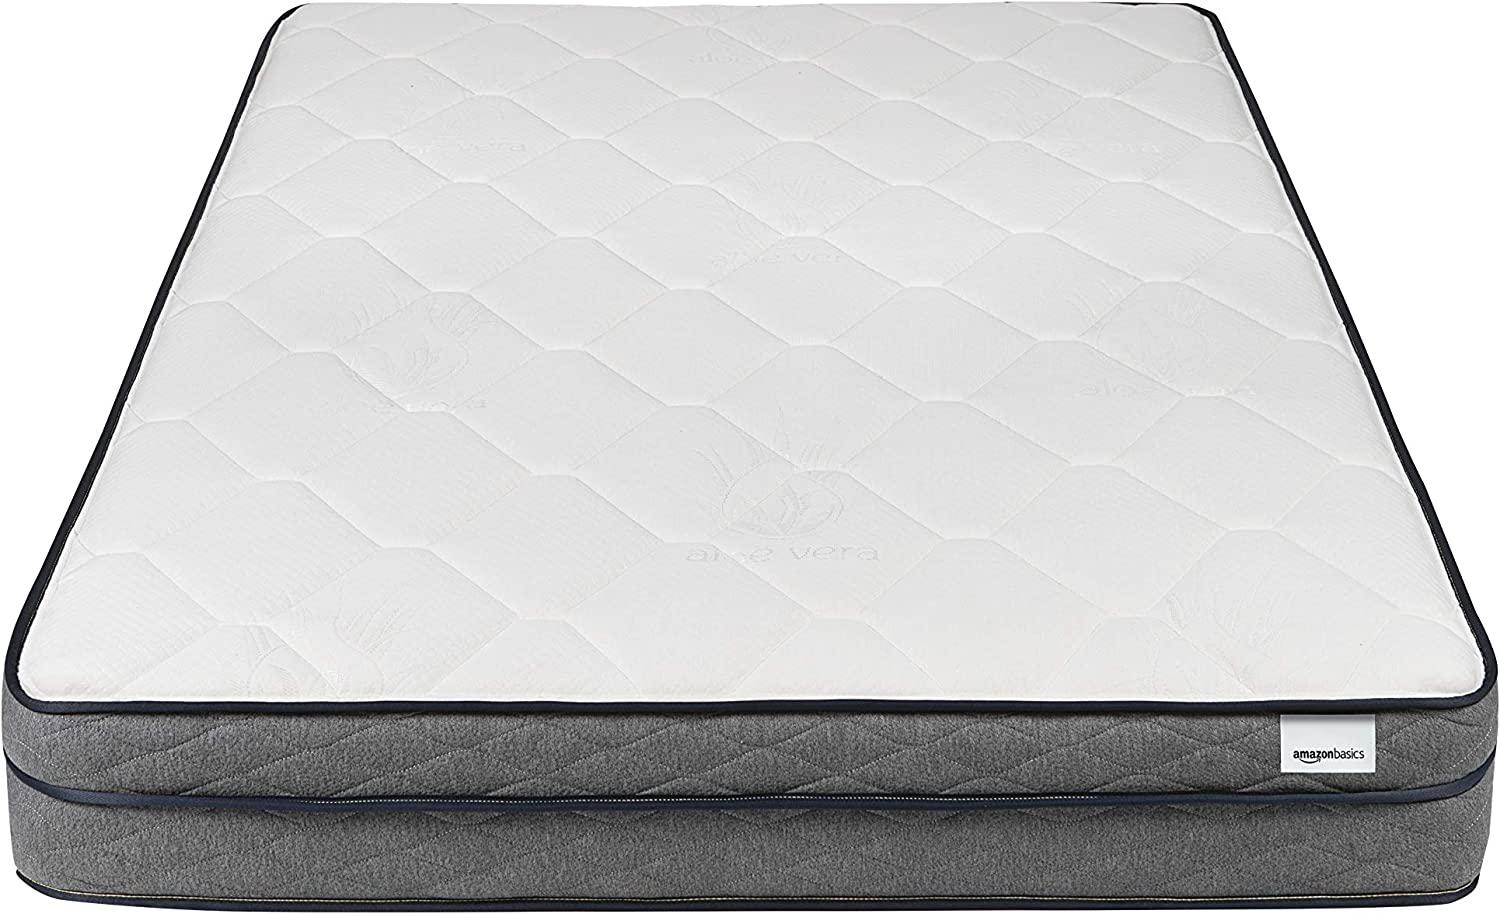 Amazon Basics 11in Queen Foam PillowTop Mattress for $173.03 Shipped